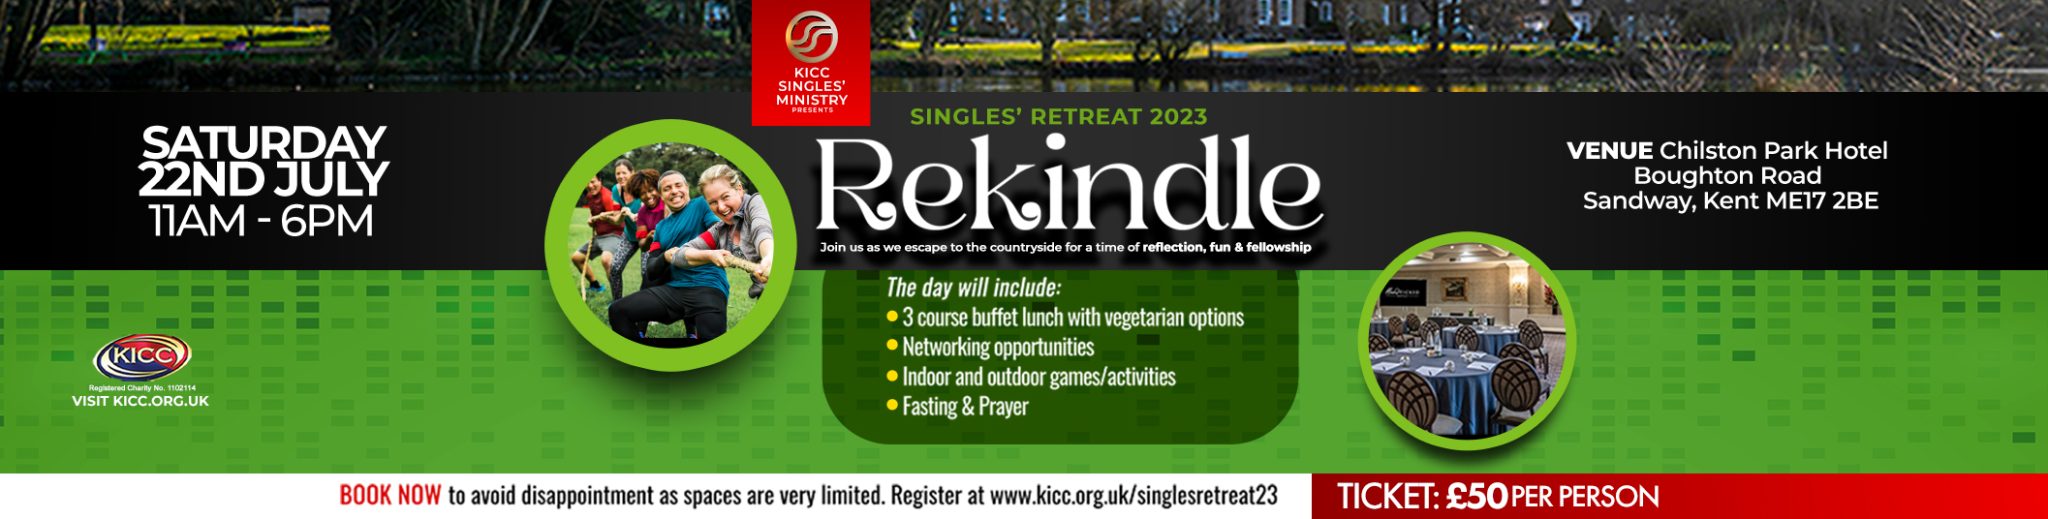 SINGLES RETREAT 2023 Kingsway International Christian Centre